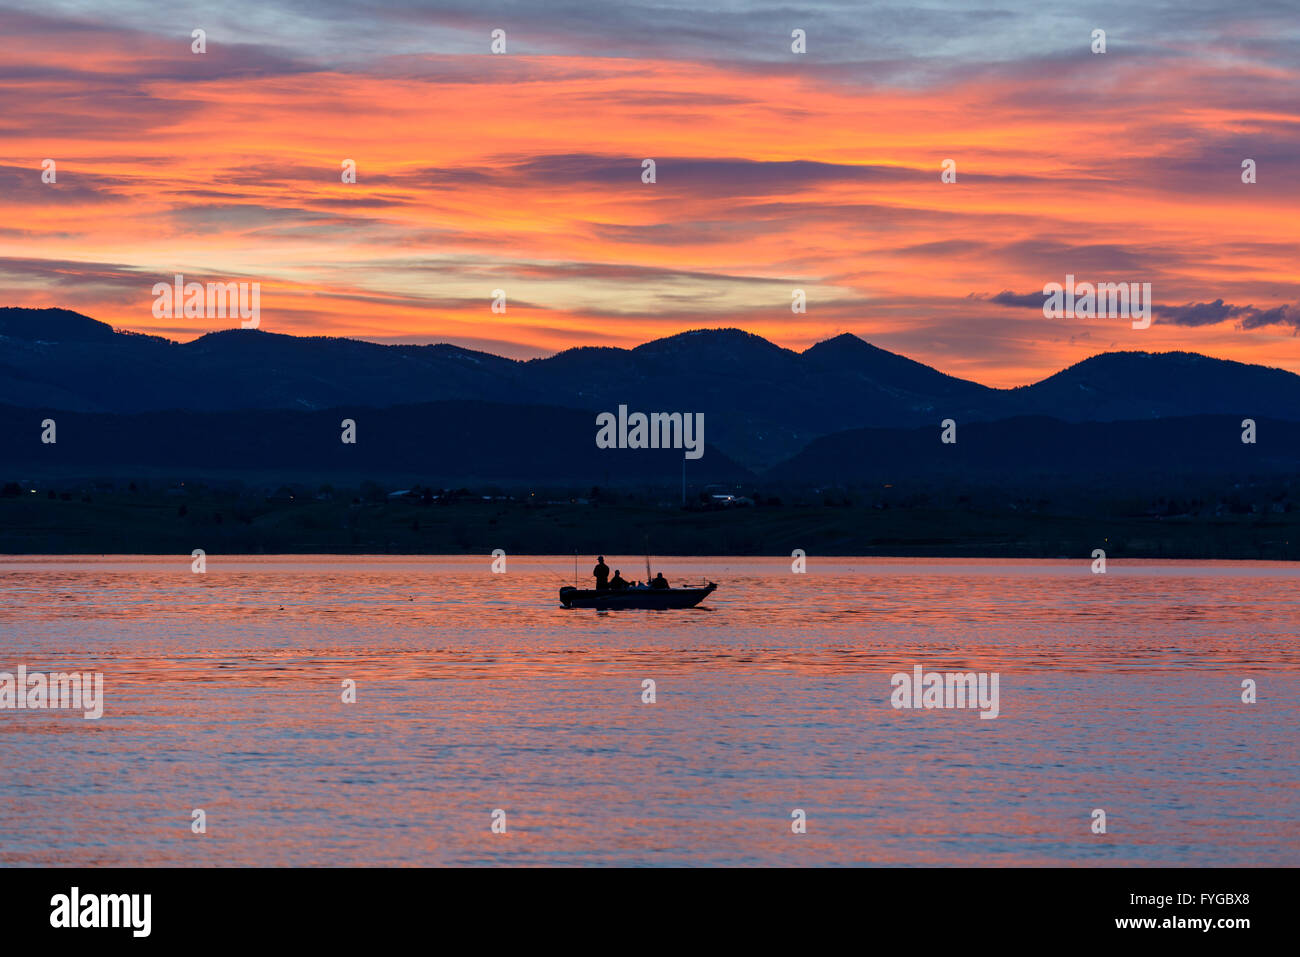 Fishing on Sunset Lake - A small fishing boat gliding cross sparkling surface of a sunset mountain lake. Stock Photo